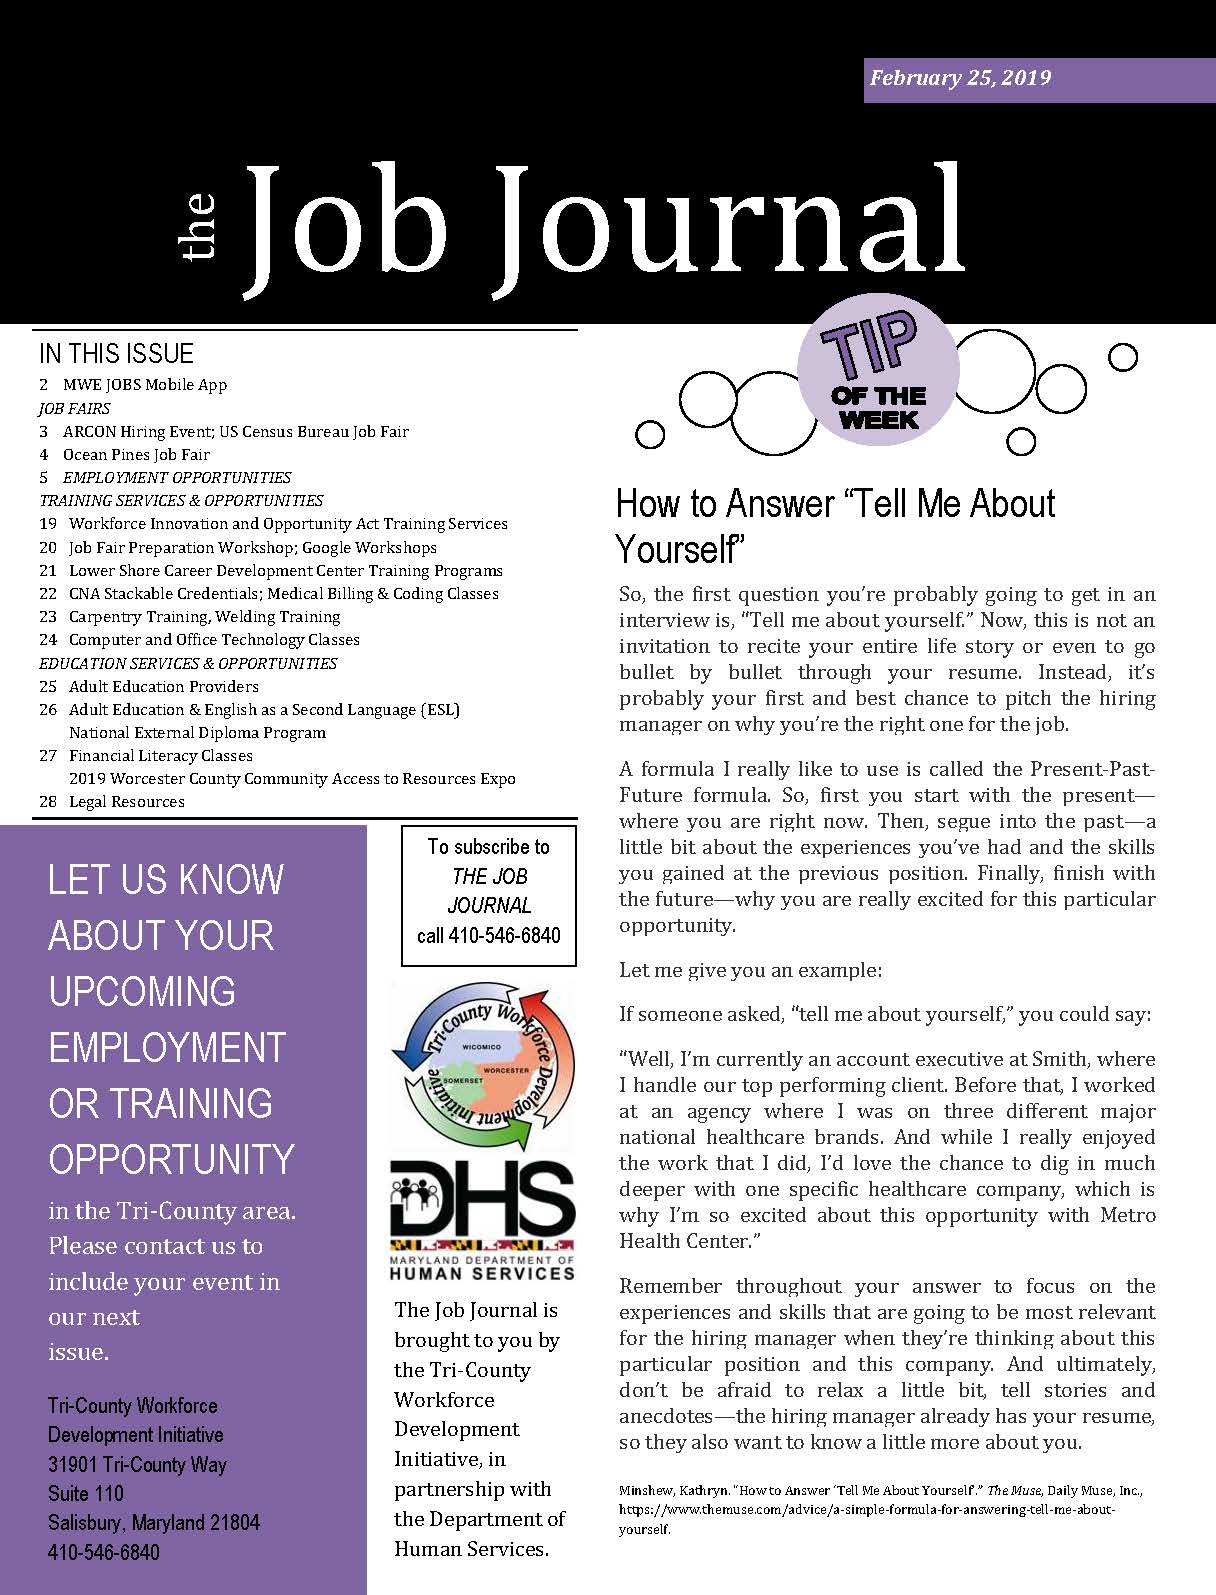 The Job Journal Feb. 25, 2019